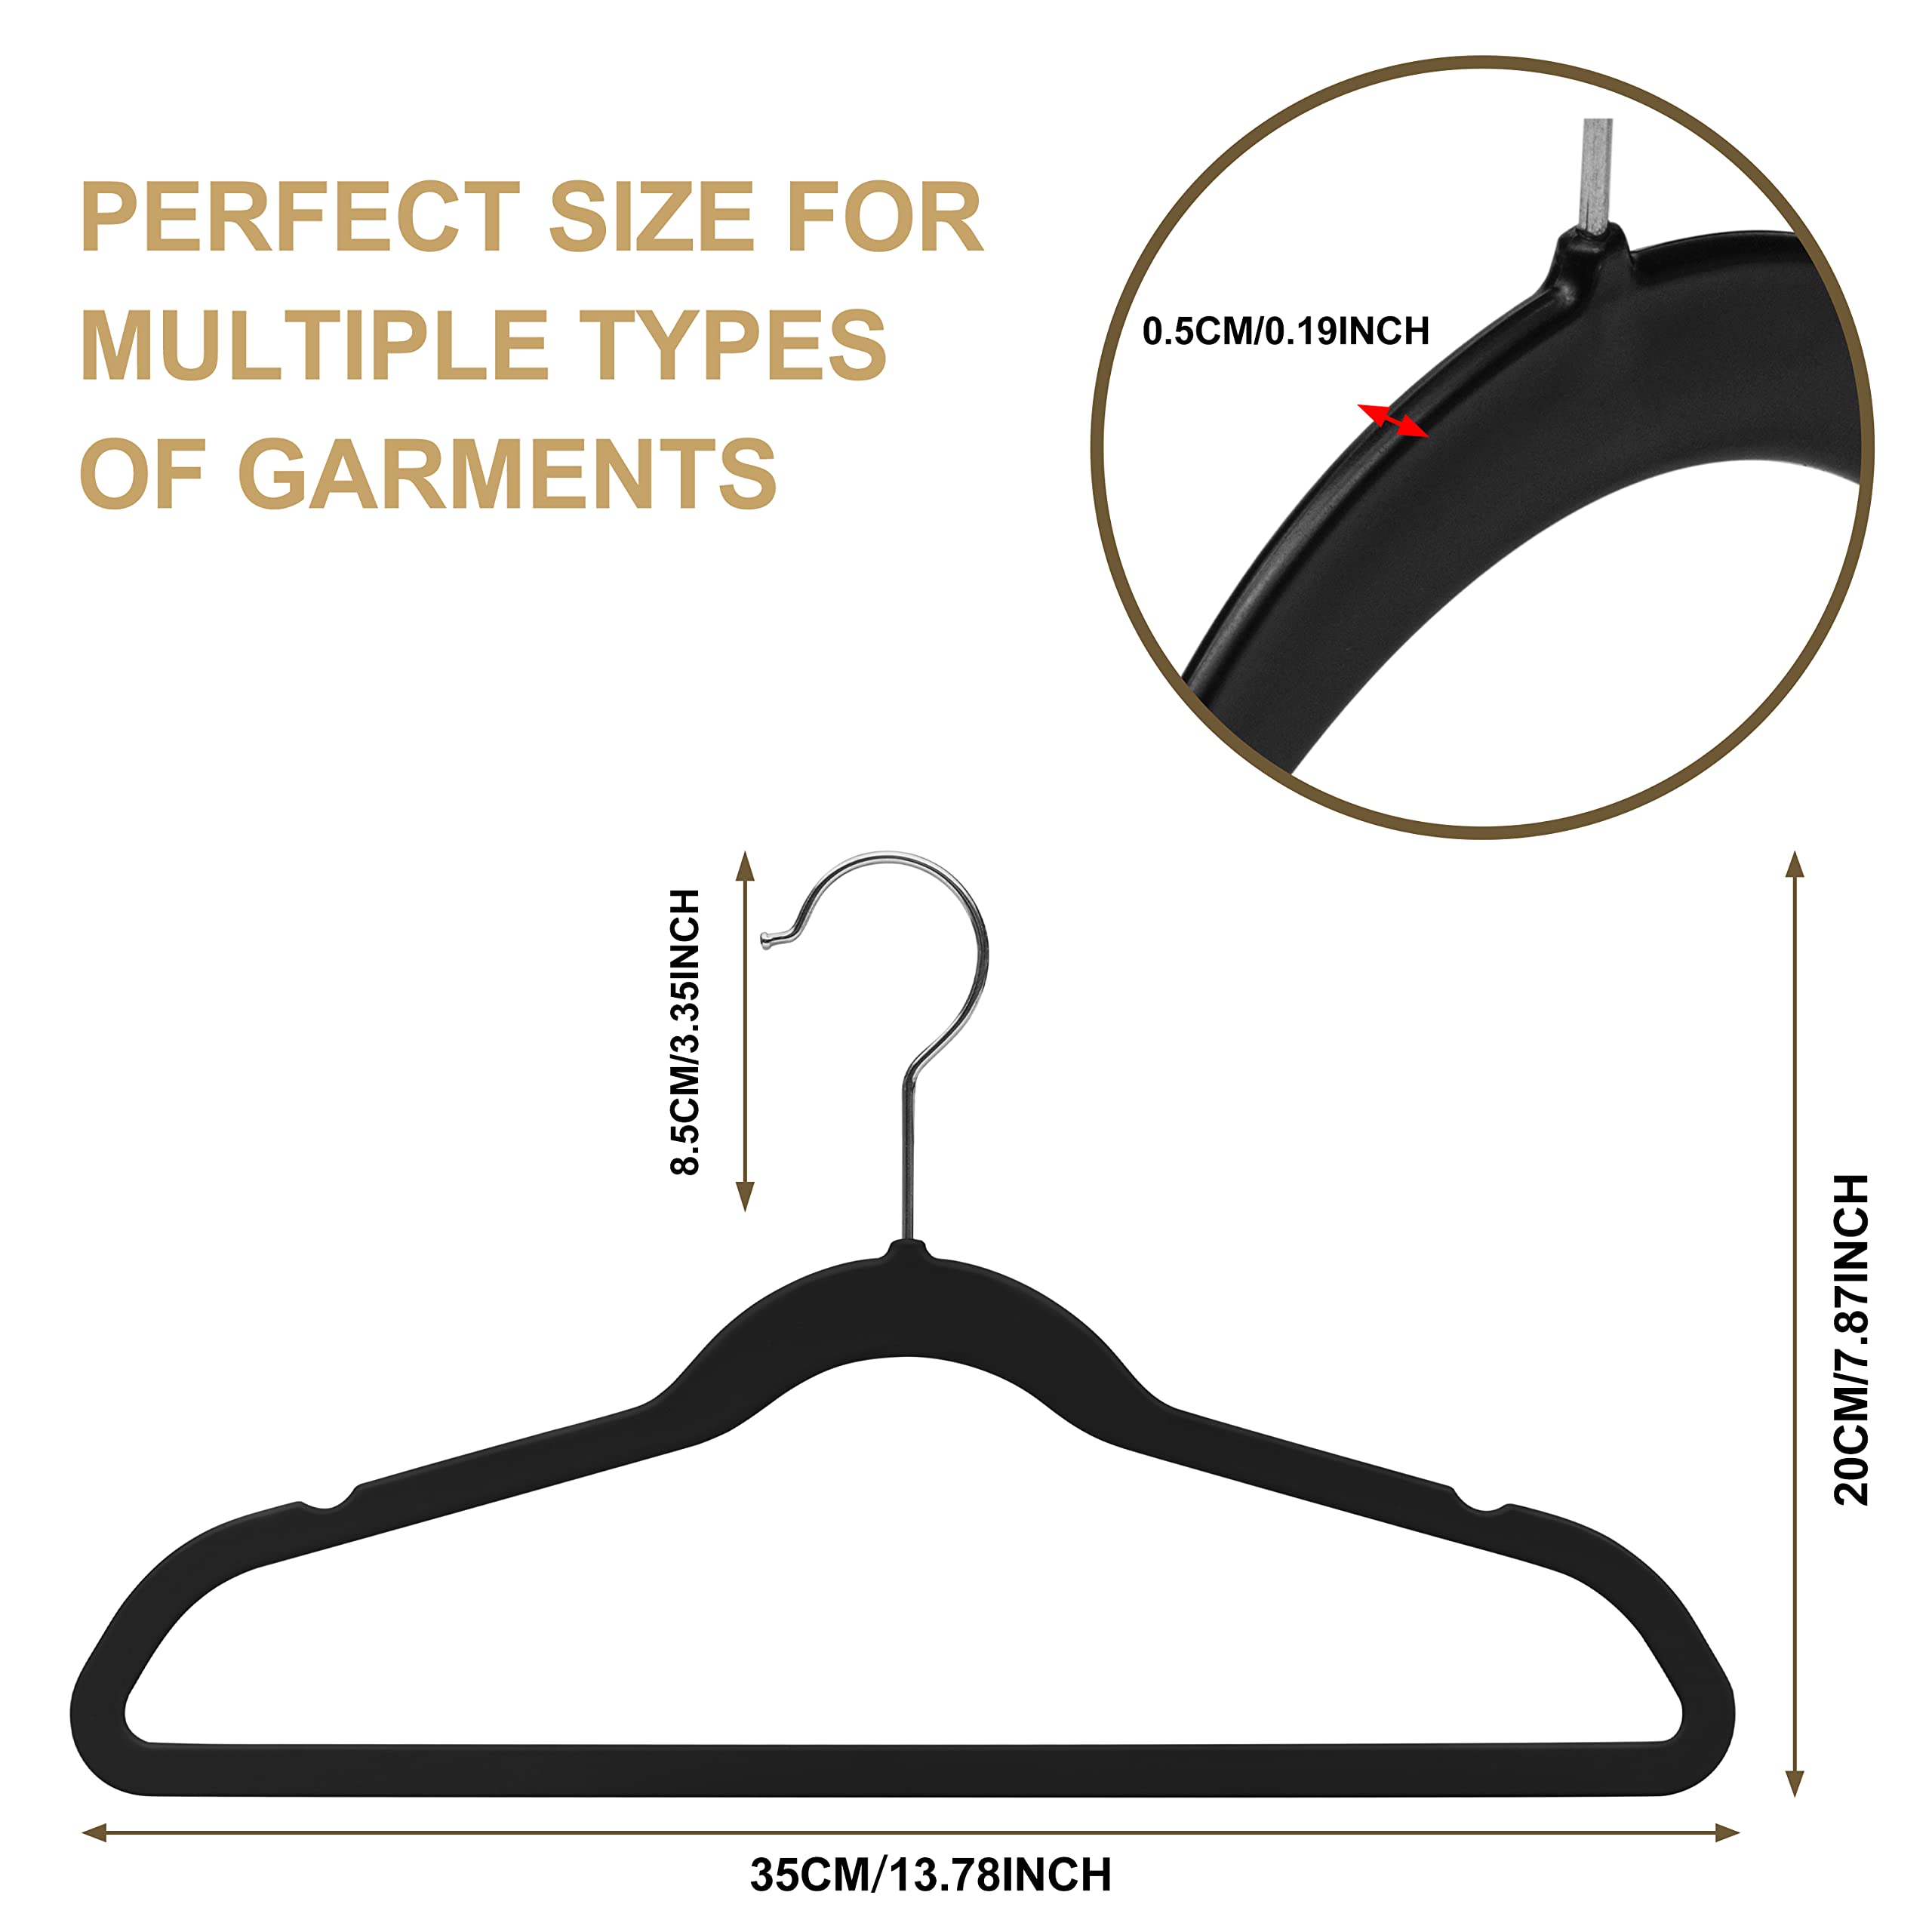 Quality Children's Plastic Non Velvet Non-Flocked Thin Compact Hangers Swivel Hook for Shirts Blouse Coats  - Acceptable